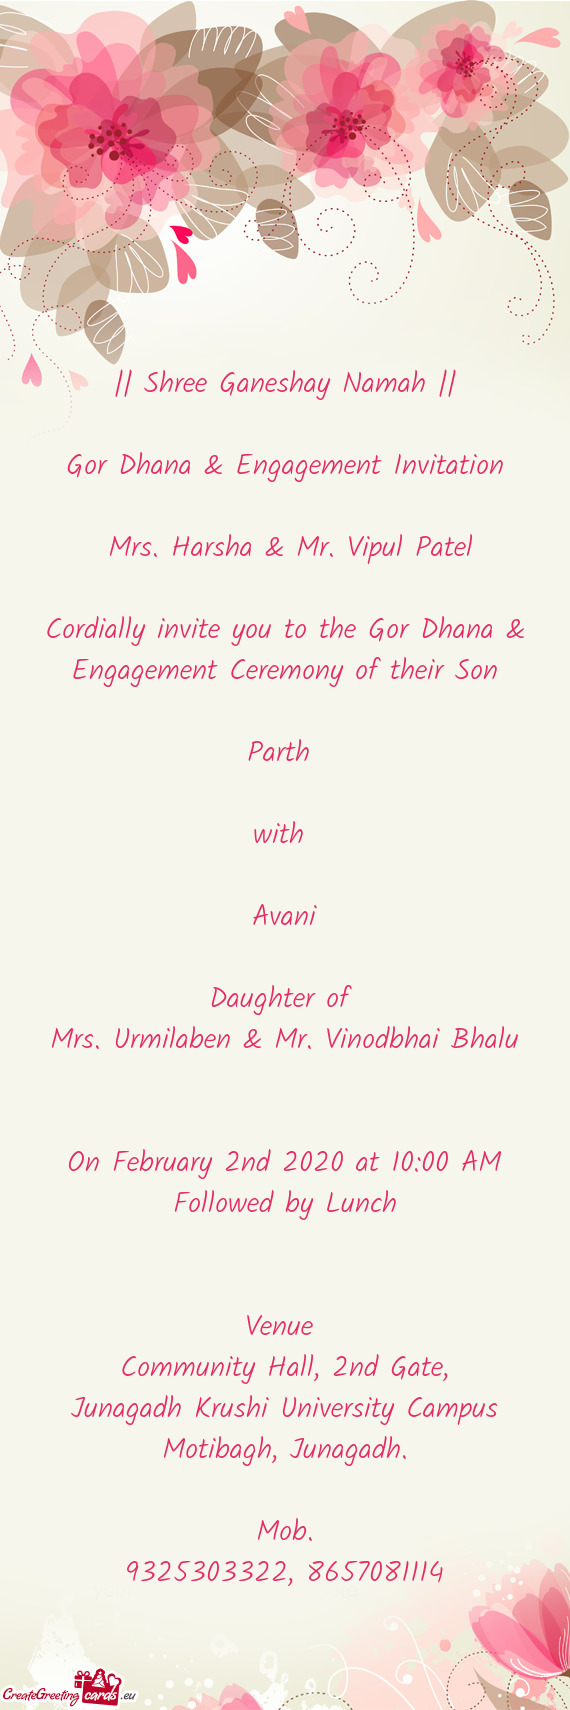 Gor Dhana & Engagement Invitation